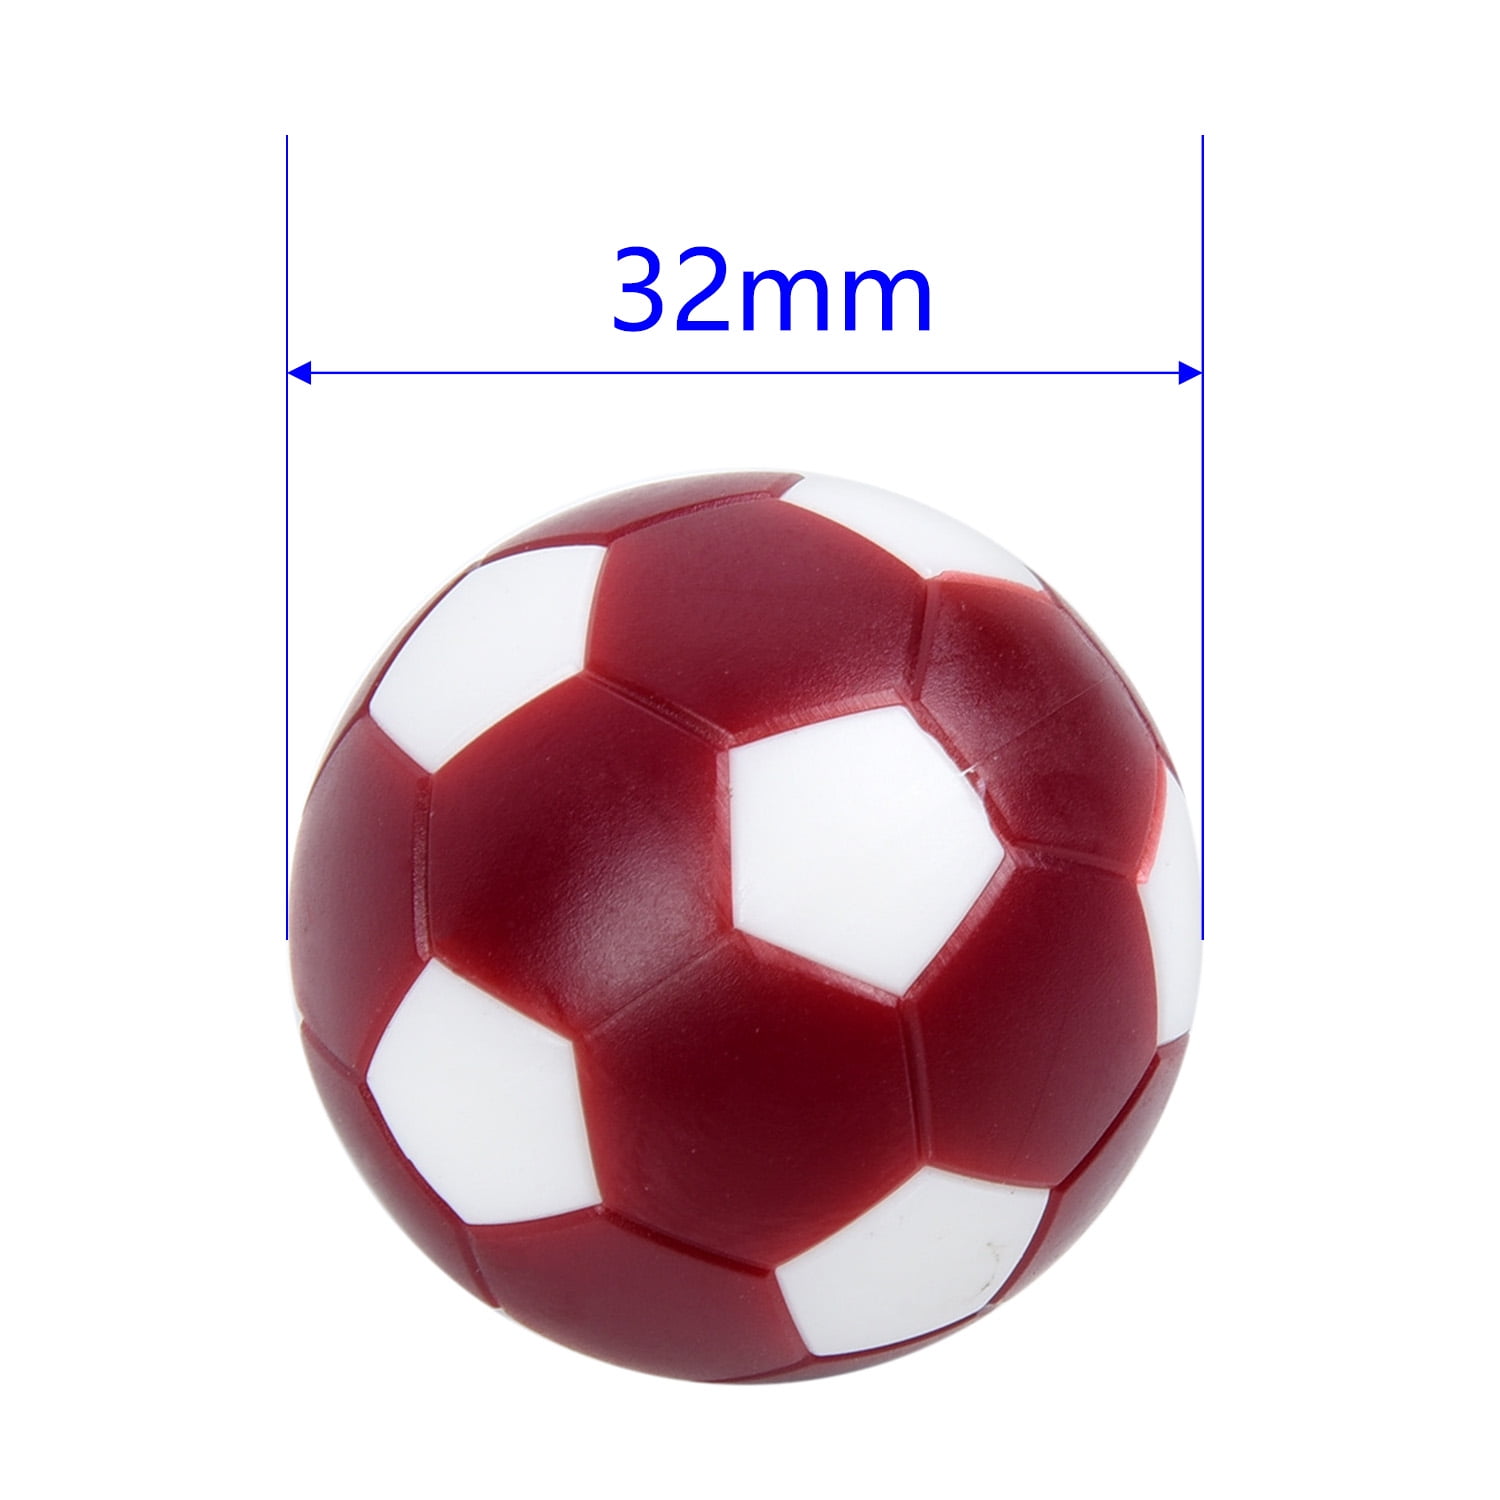 2x 32mm Foosball Table Football Plastic Soccer Ball Soccer ball Sport Gifts NSNE 